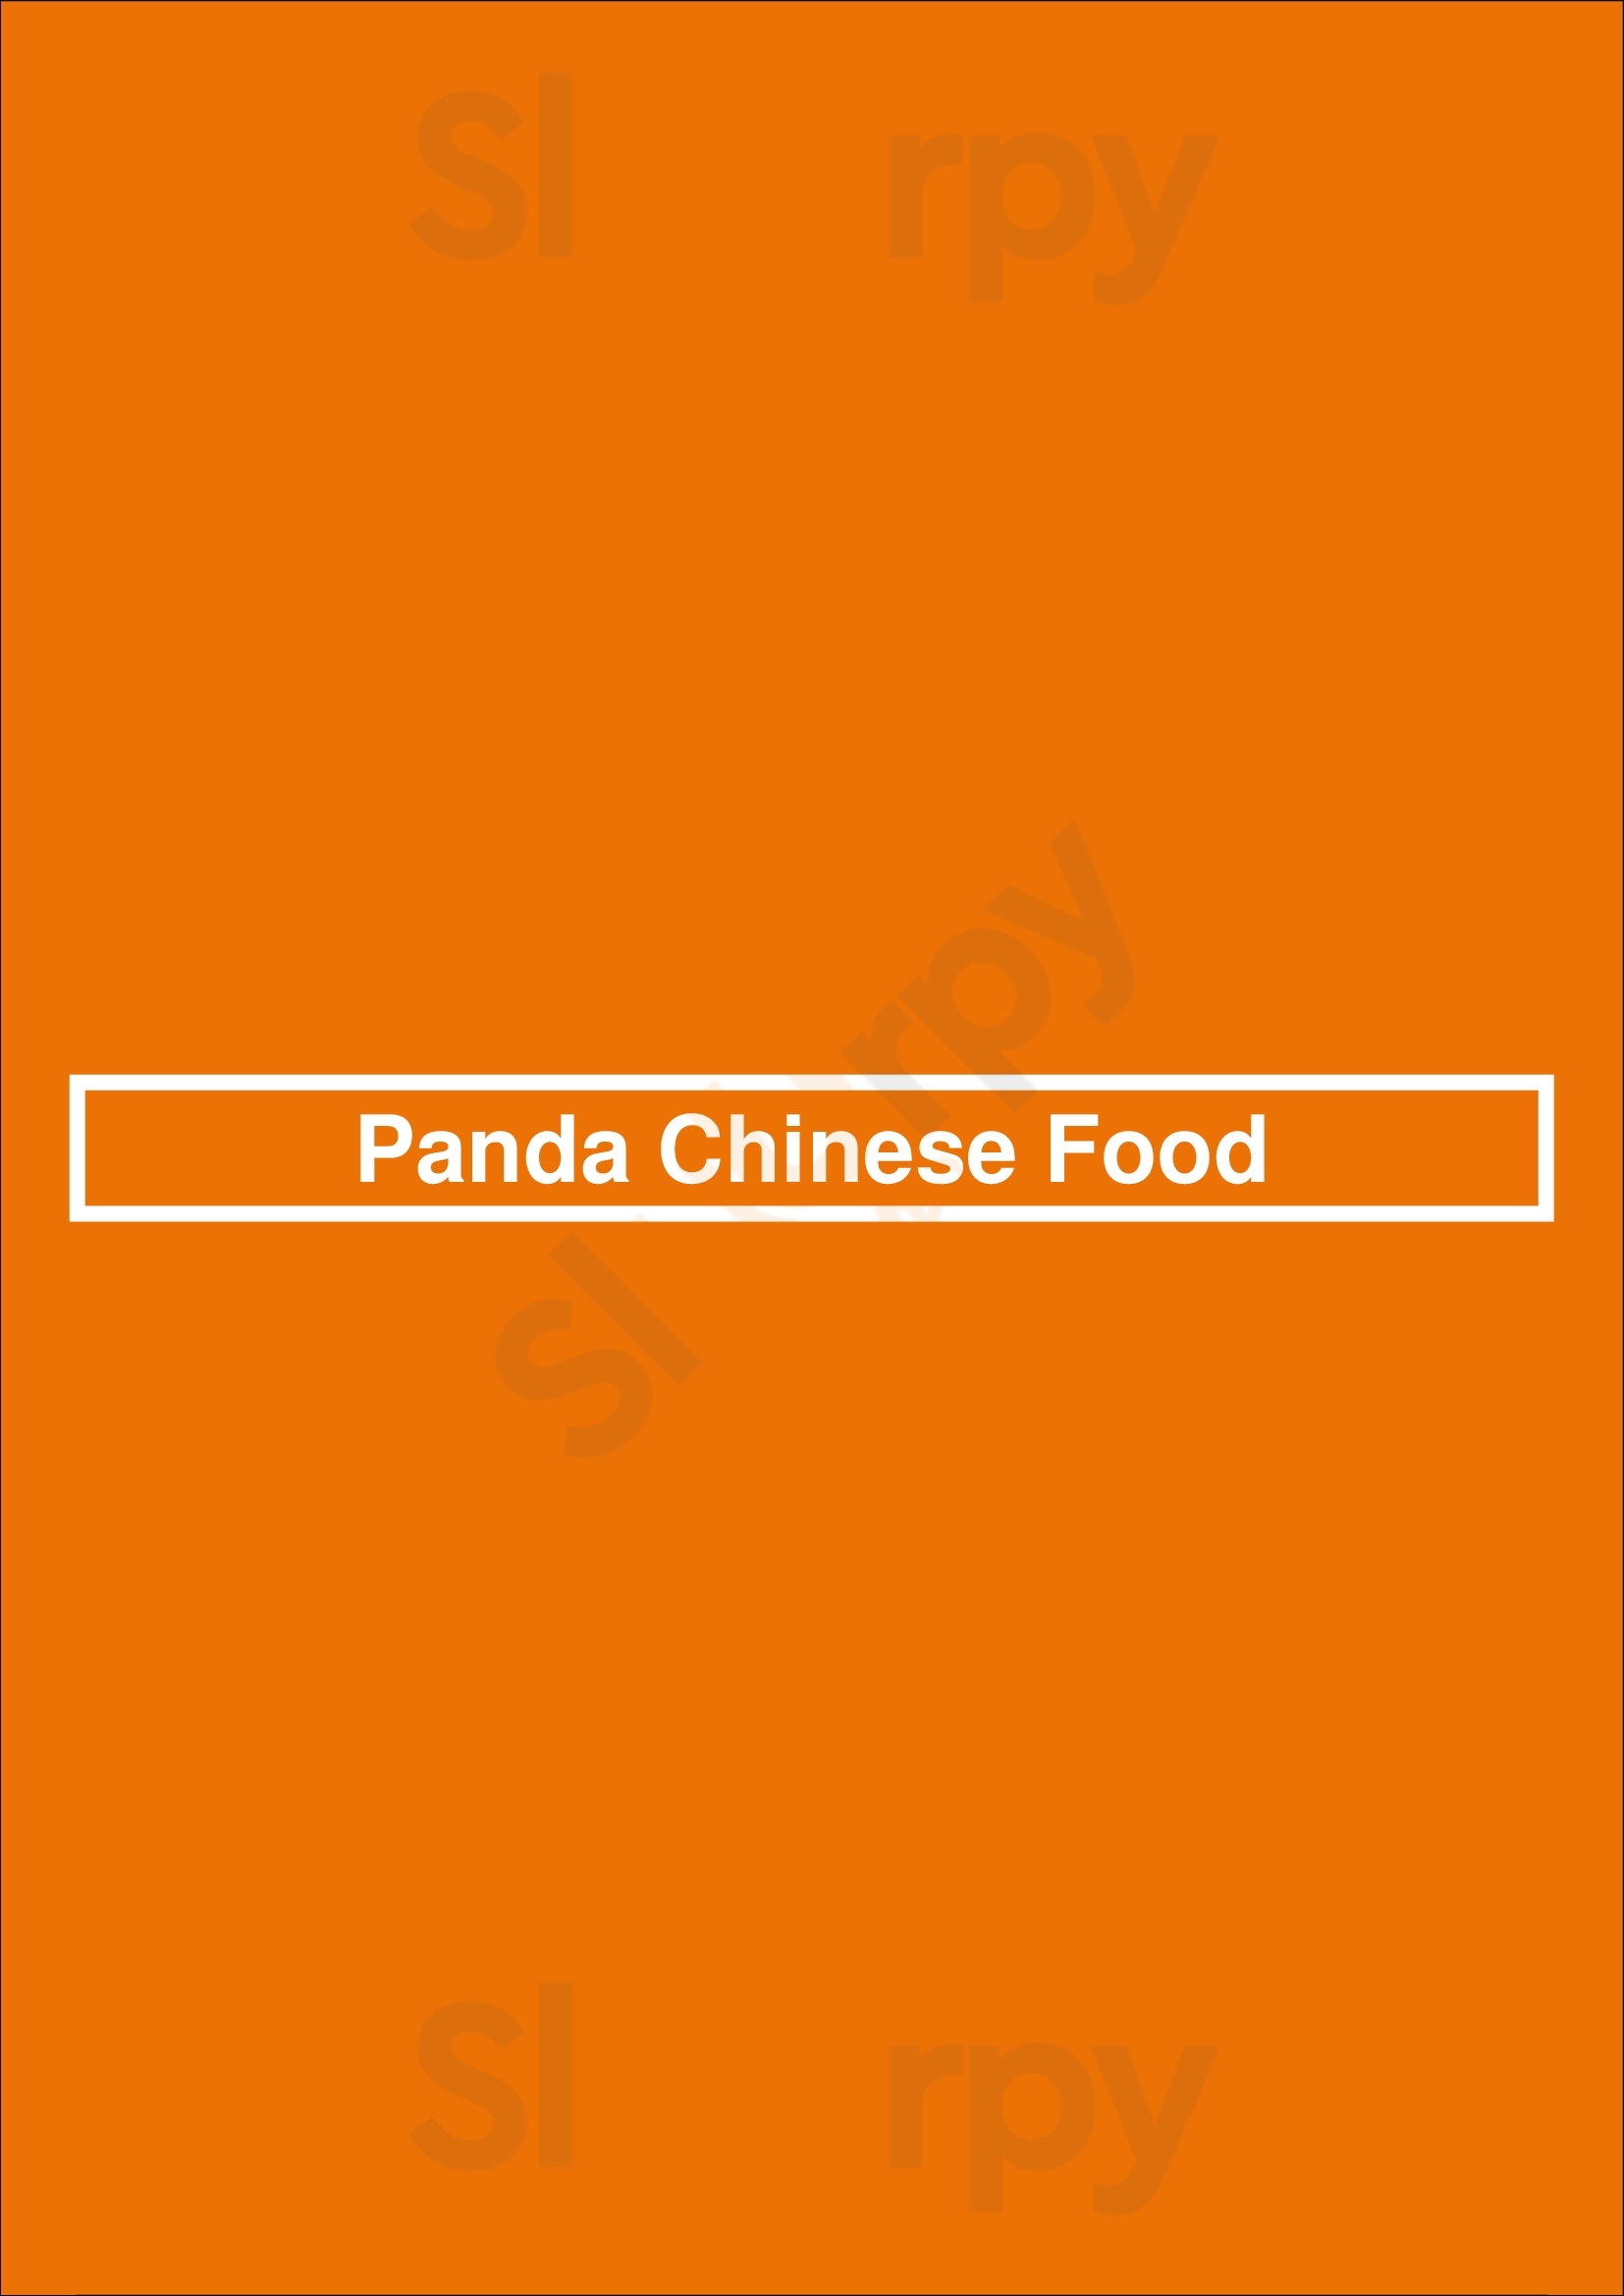 Panda Chinese Food Dallas Menu - 1